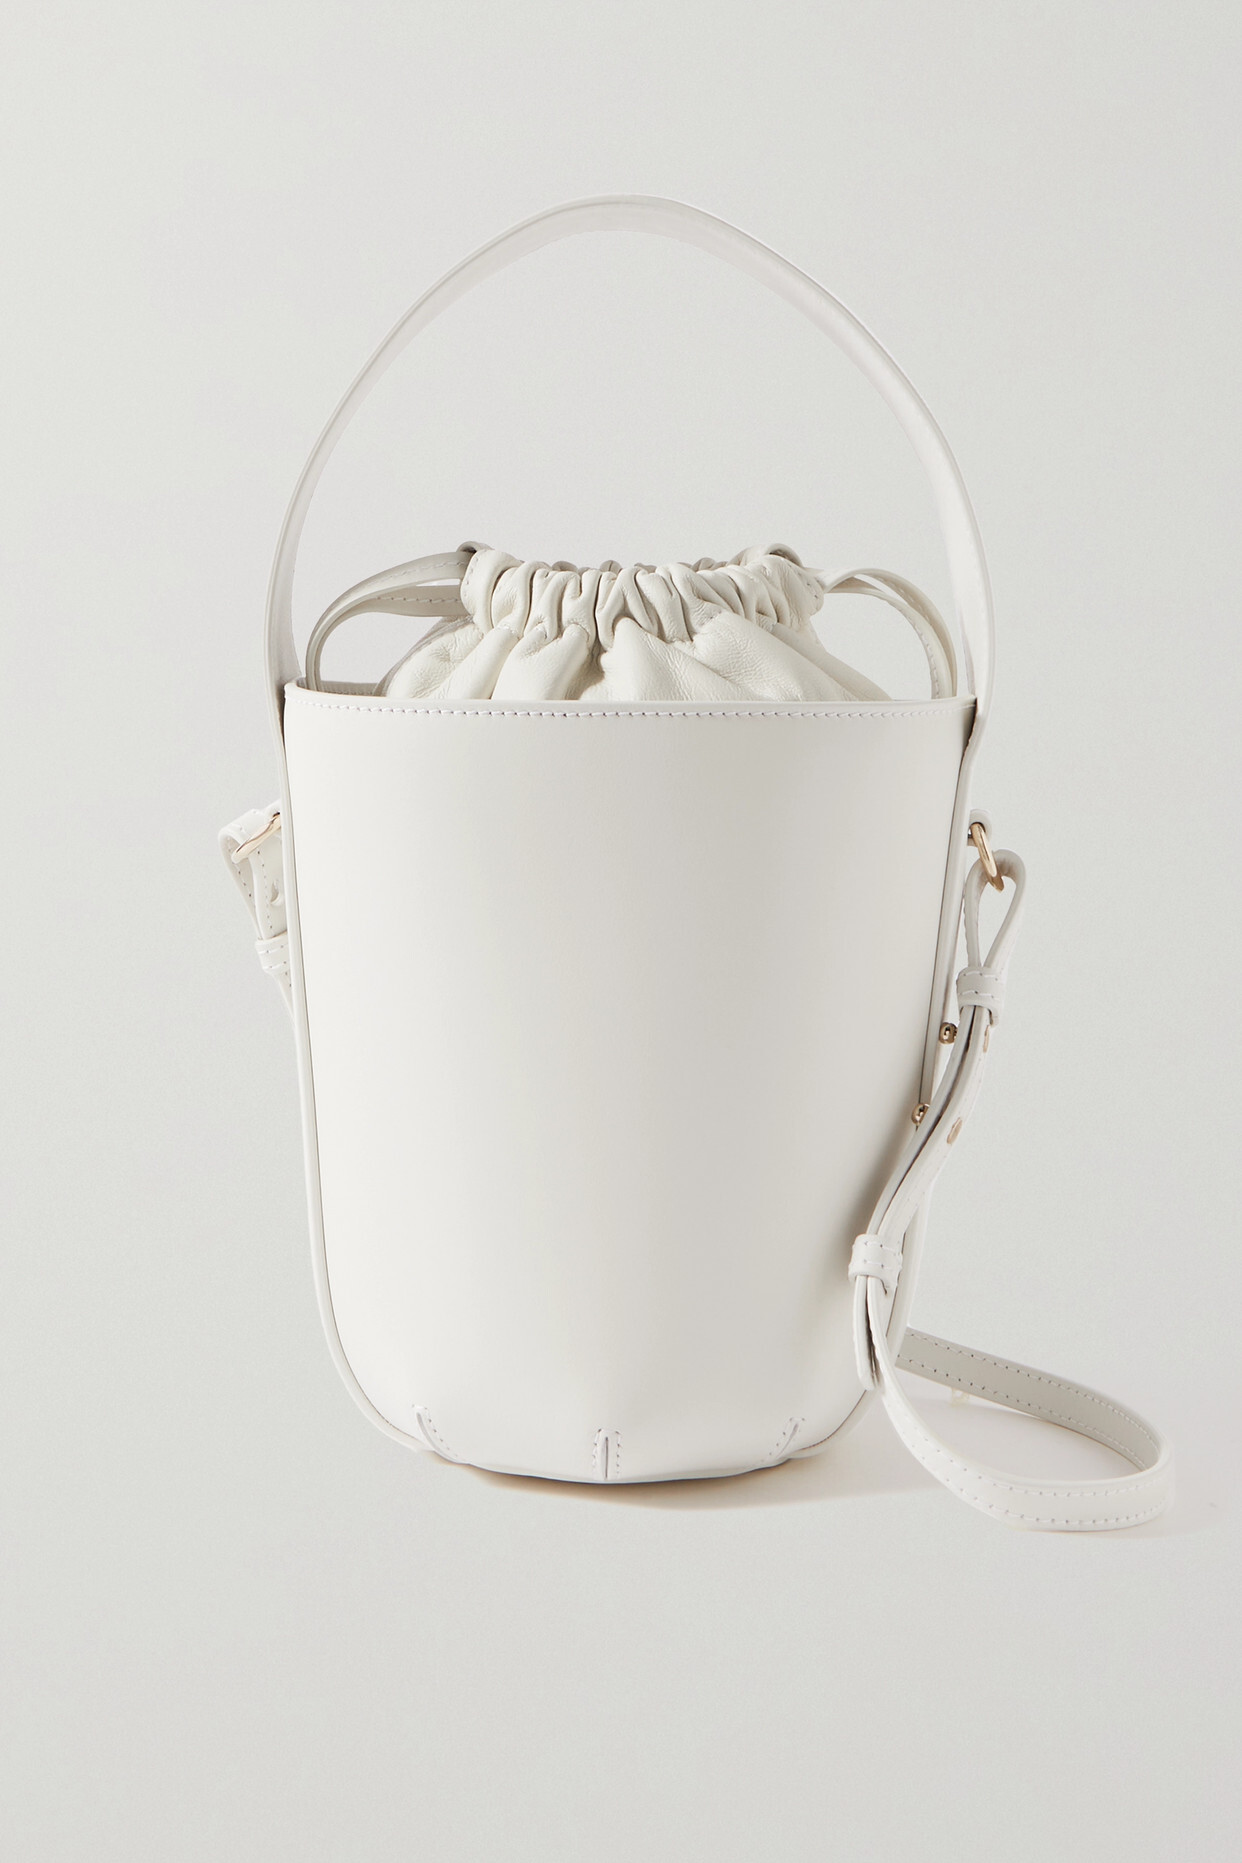 Chloé Chloé - + Net Sustain Sense Embroidered Leather Bucket Bag - White